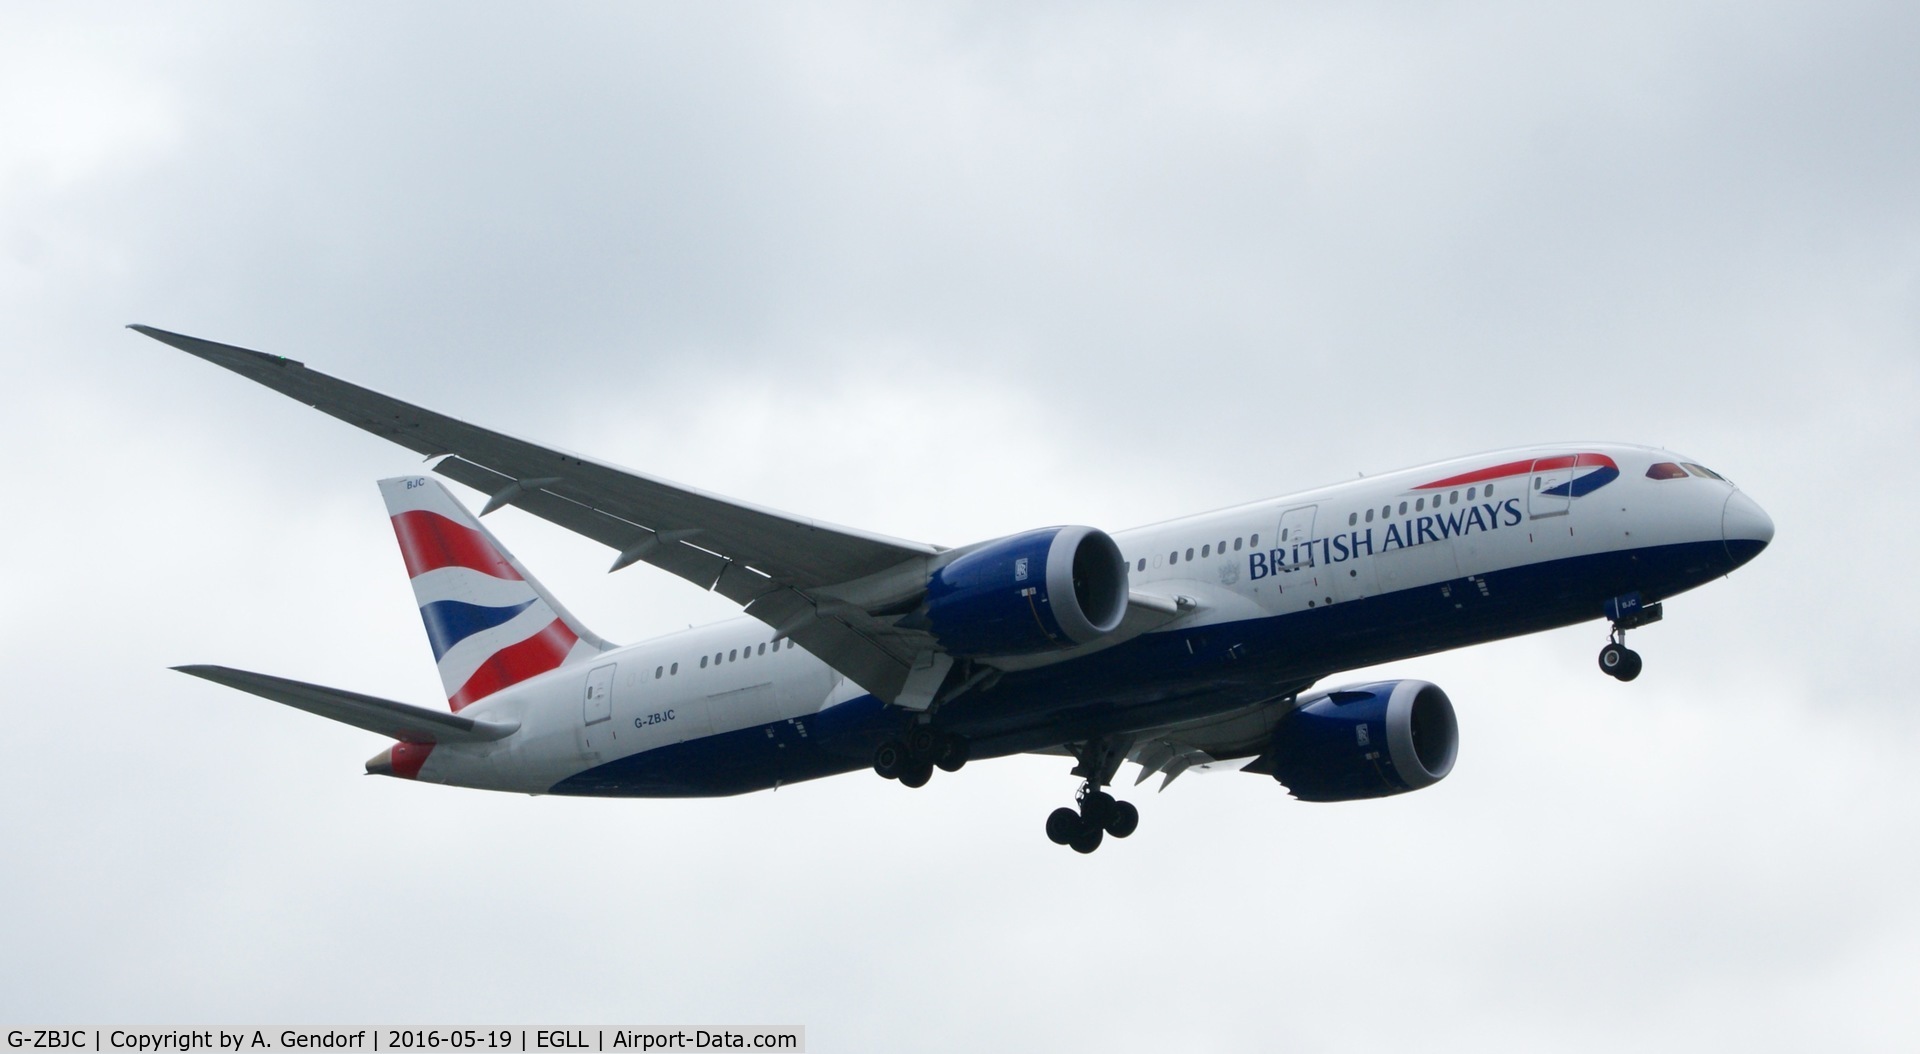 G-ZBJC, 2013 Boeing 787-8 Dreamliner C/N 38611, British Airways, is here landing at London Heathrow(EGLL)